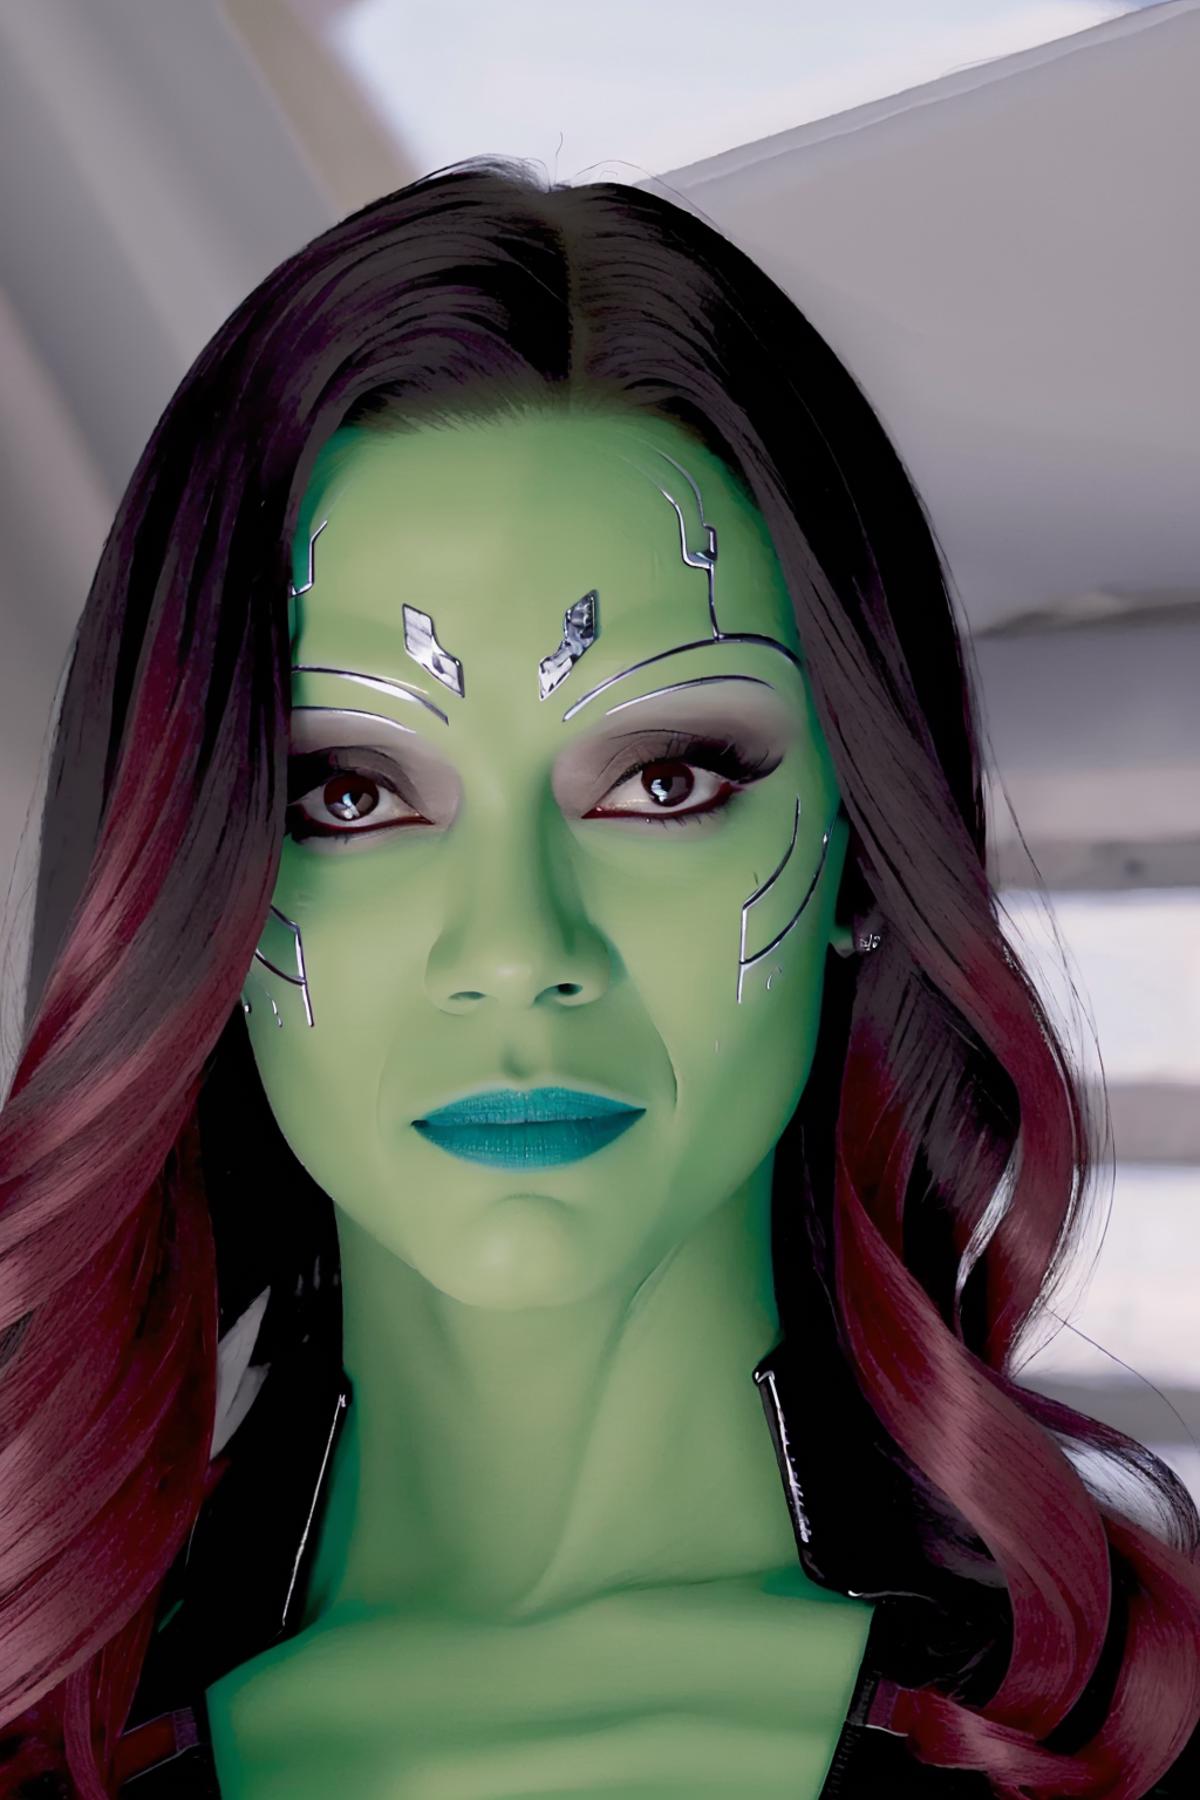 Zoe Saldana as Gamora from Guardians of the Galaxy (Lora) image by BoomAi